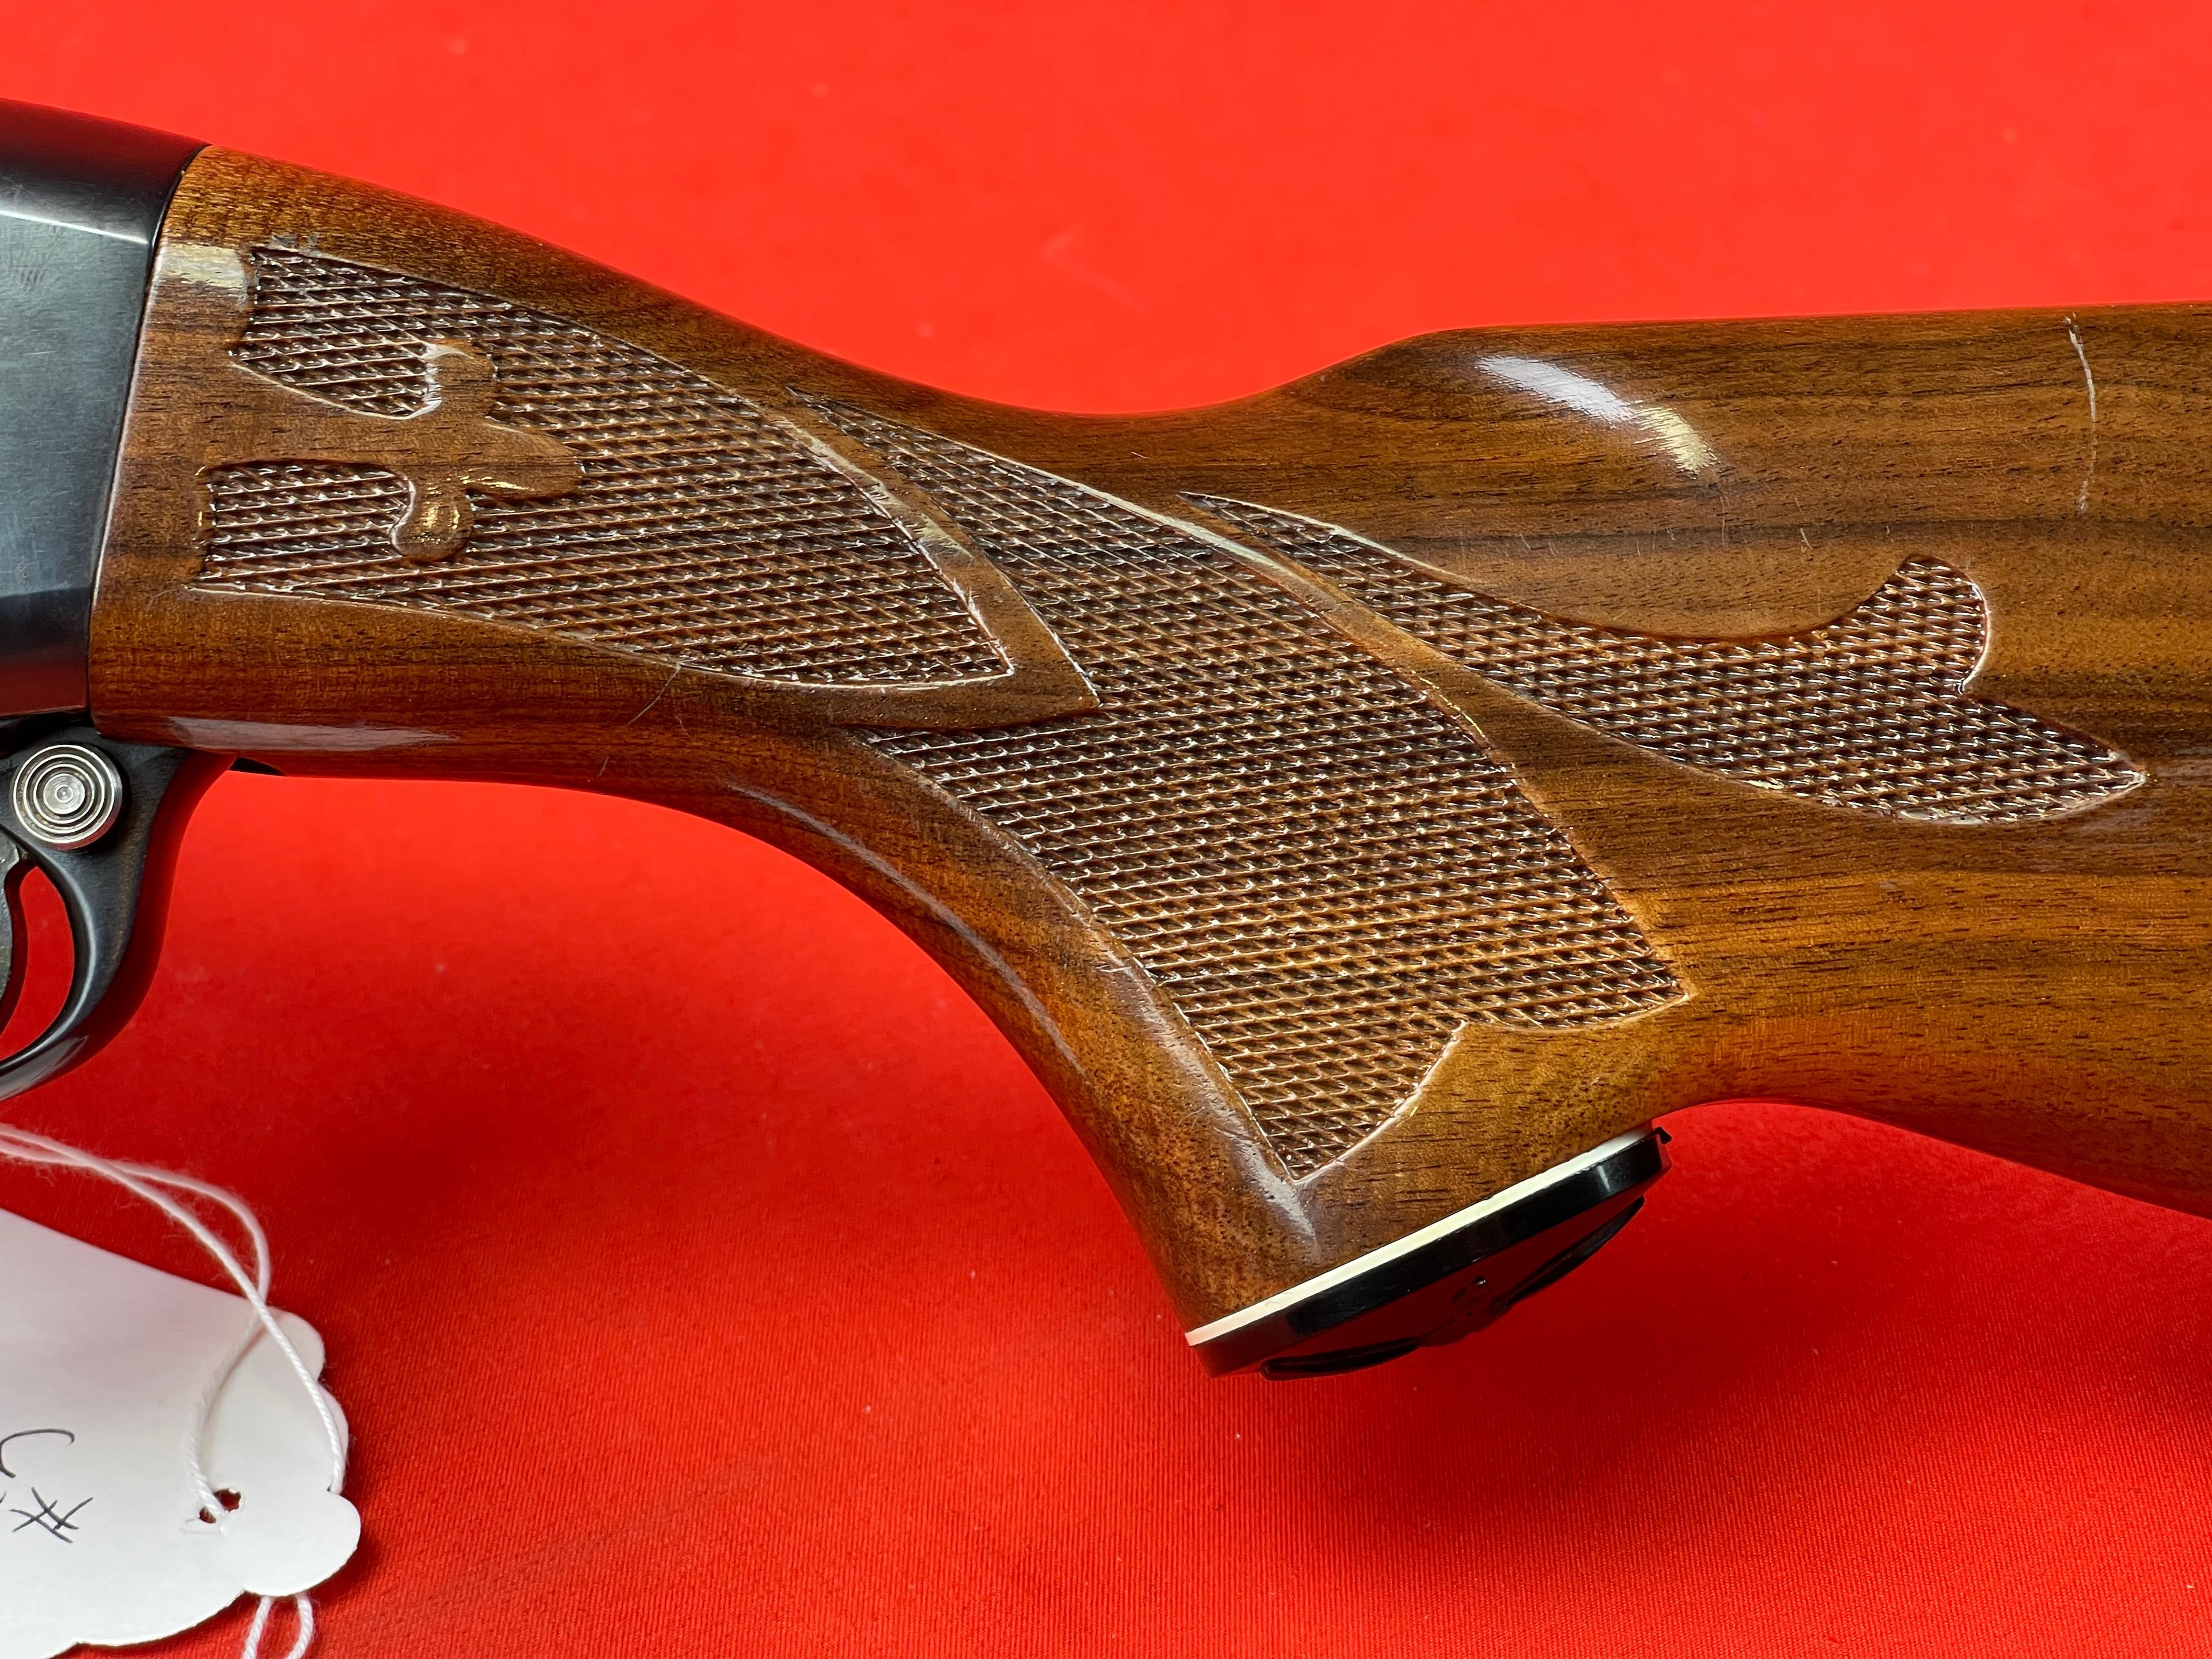 Remington 870, 12-Ga., Left Hand, 26" Bbl., SN:388746V